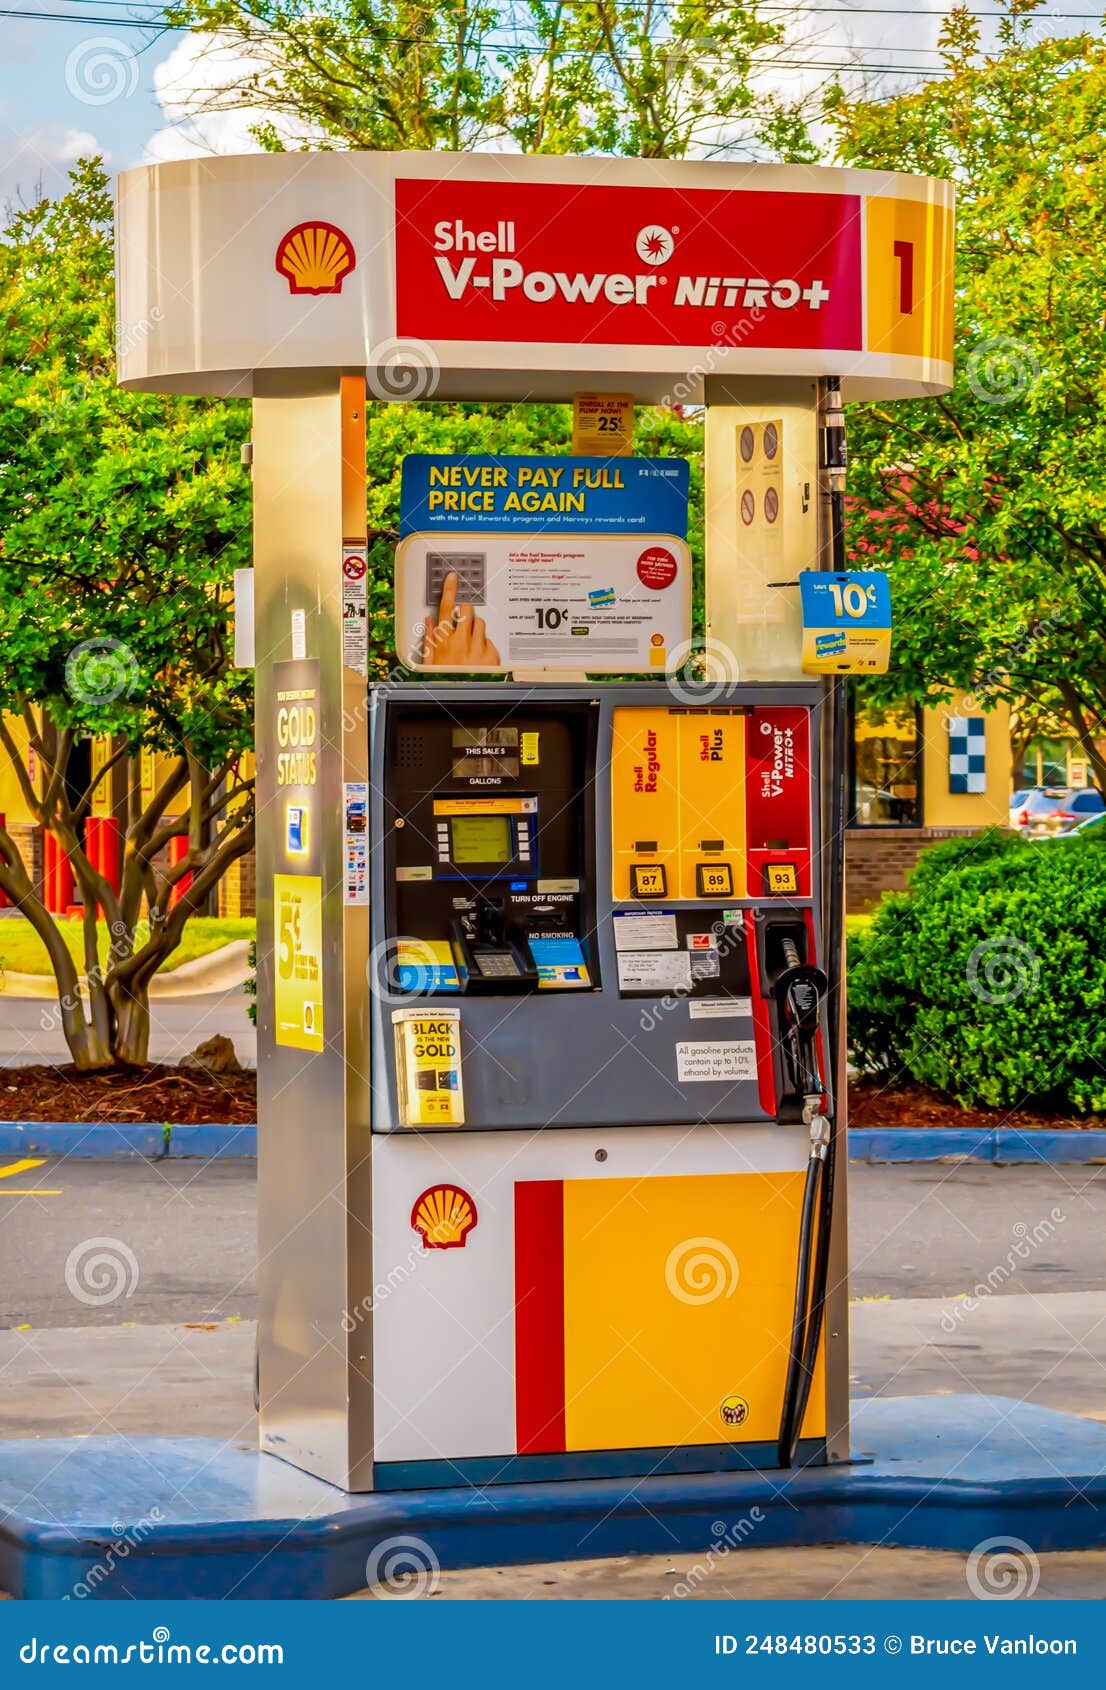 Does Shell V Power Nitro Have Ethanol 